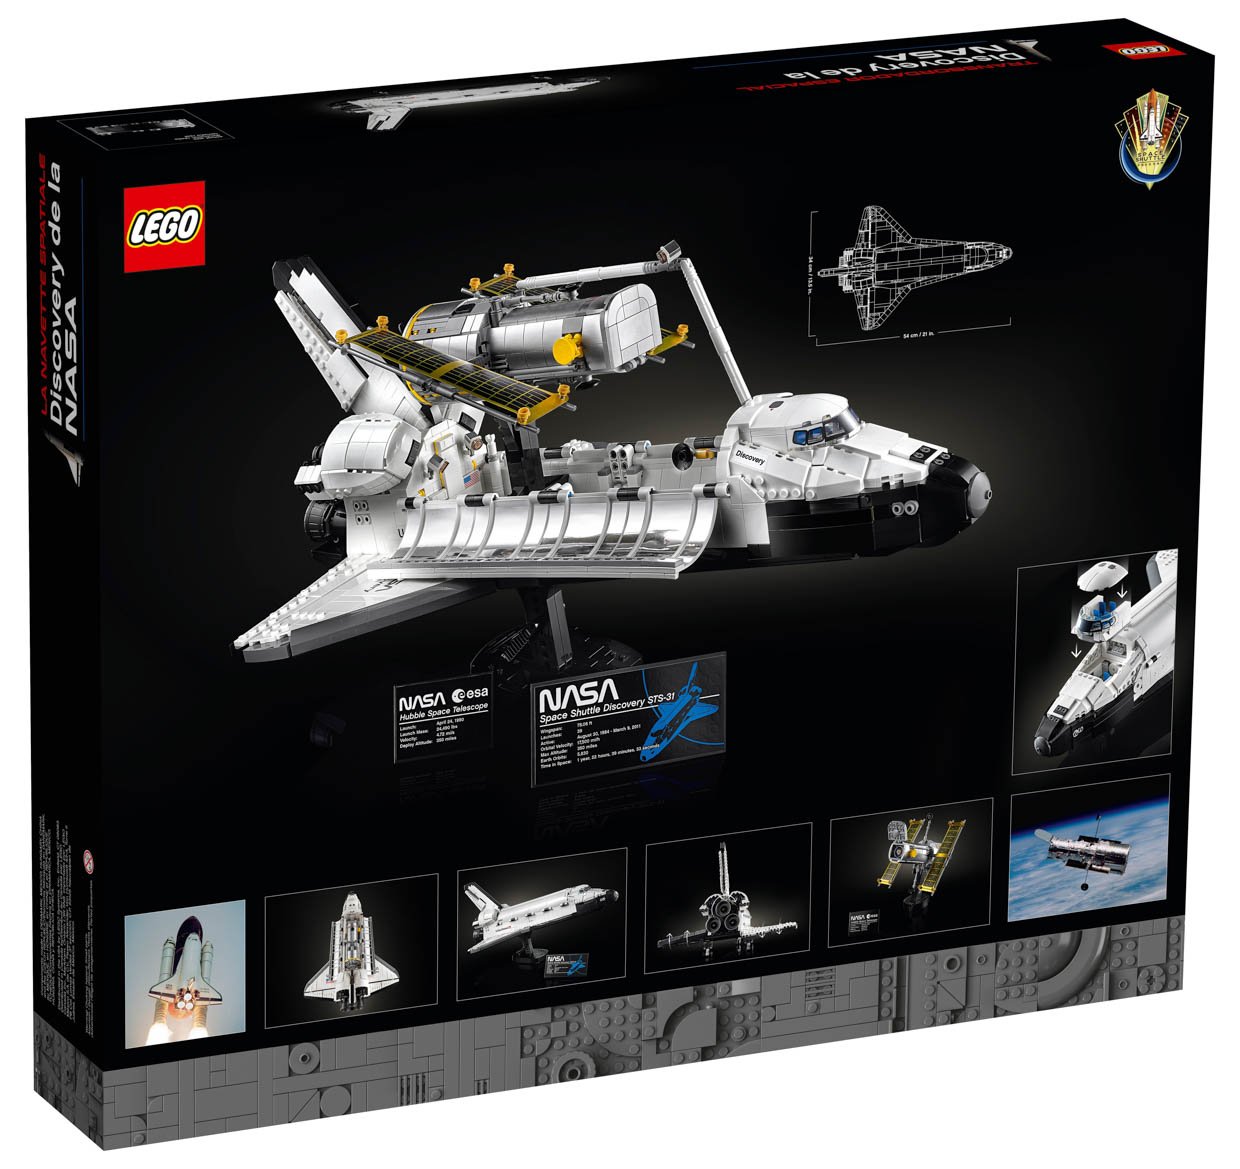 LEGO Creator Expert NASA Space Shuttle Discovery